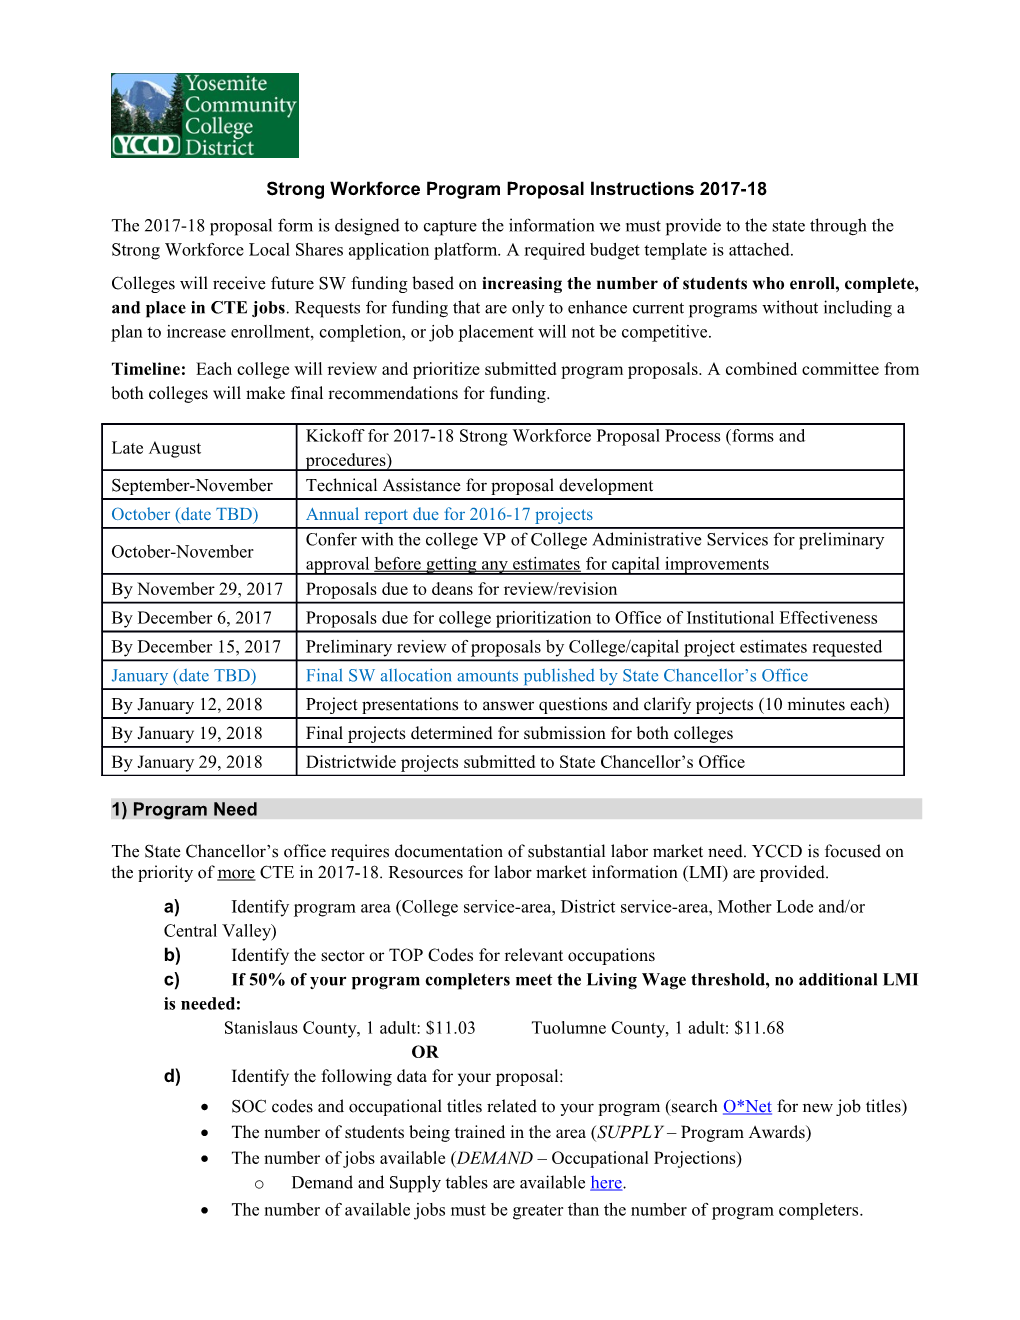 Strong Workforce Program Proposal Instructions2017-18